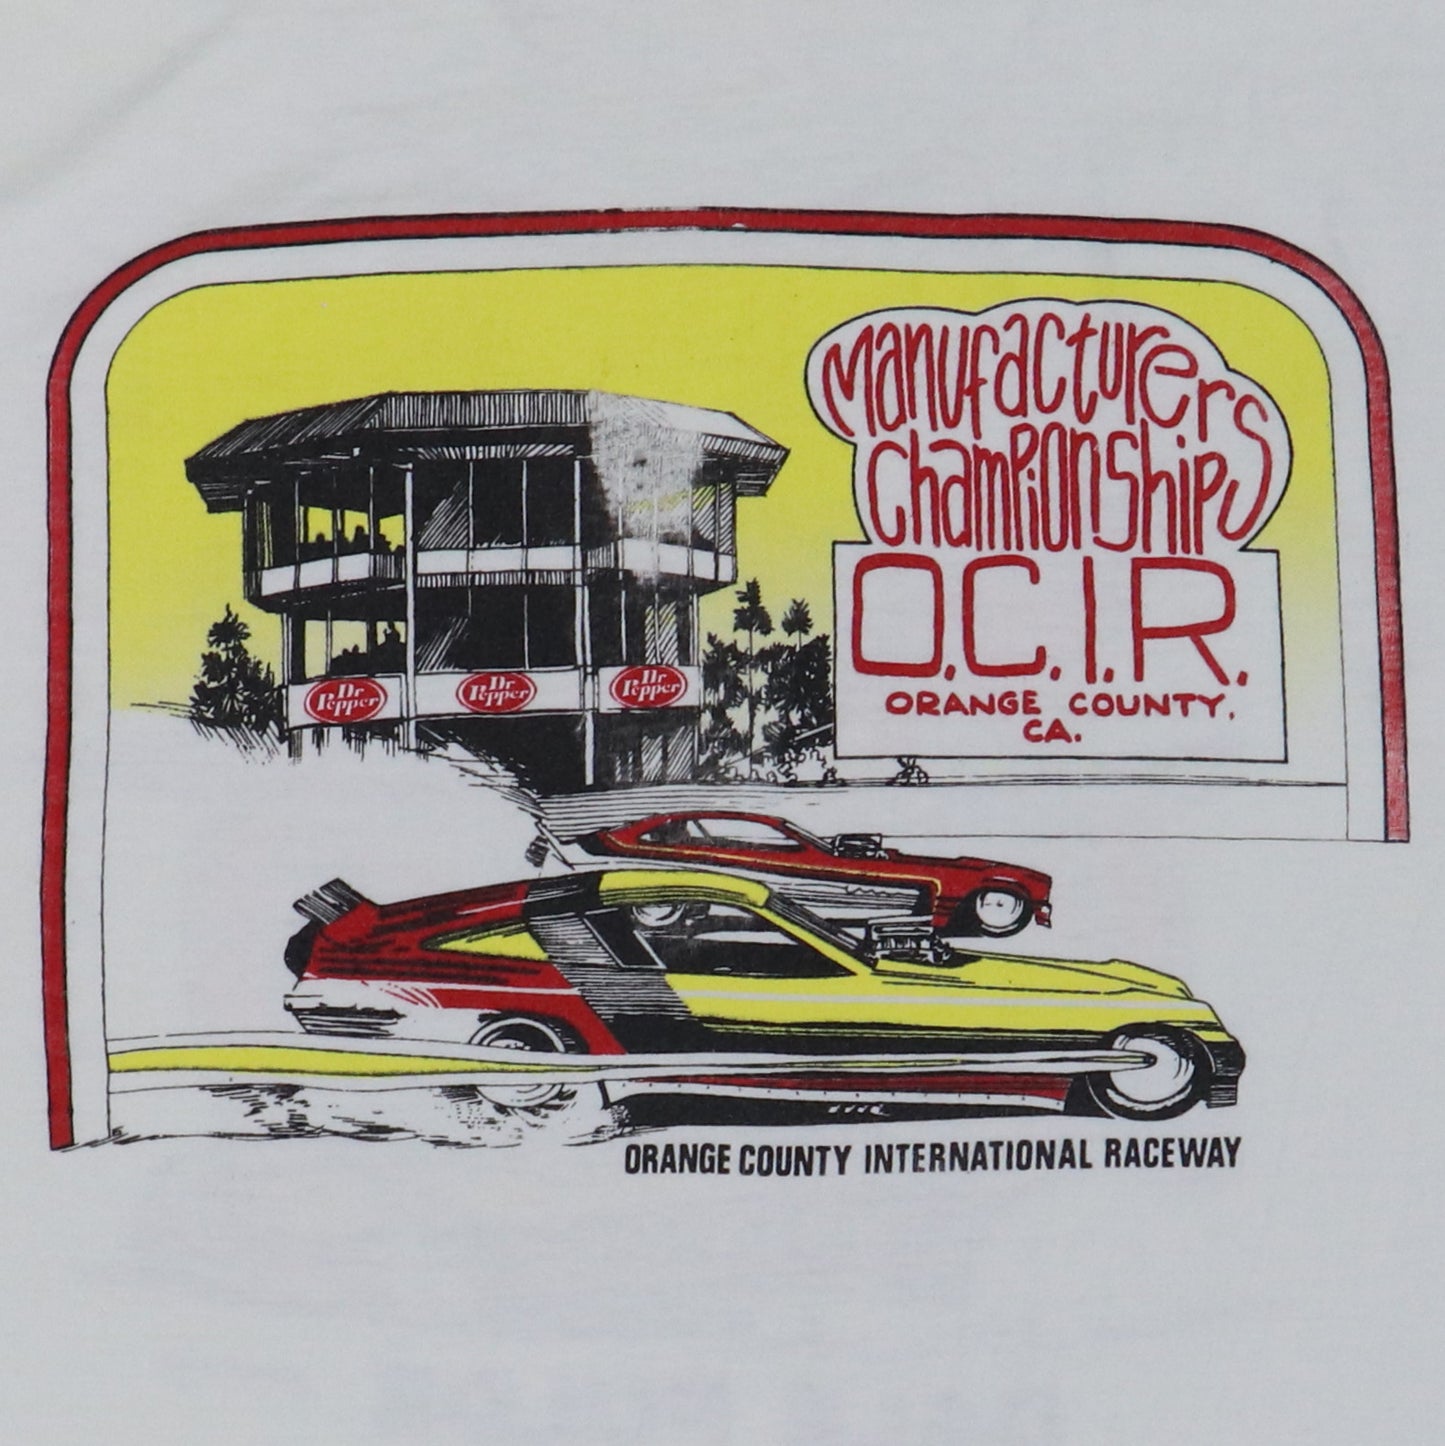 1970s Dale Pulde War Eagle Orange County International Raceway Shirt